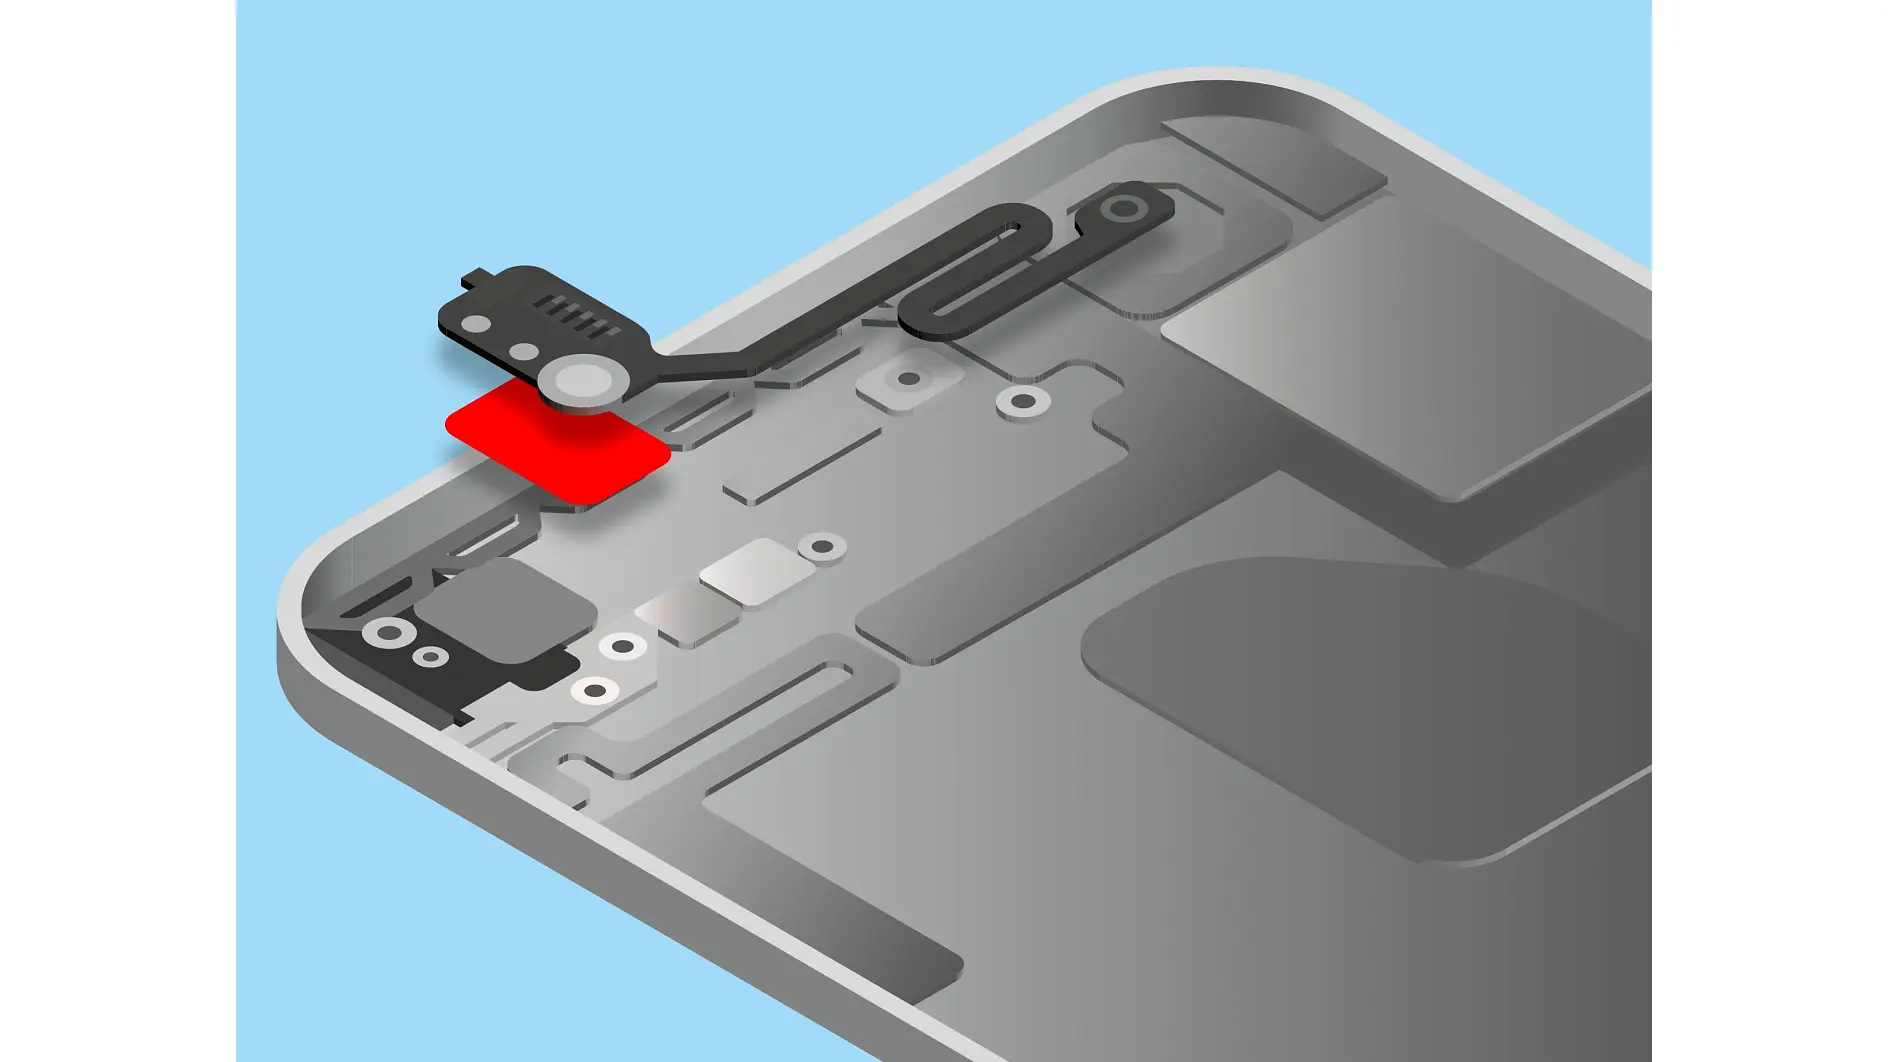 tesa-electronics-smartphone-antenna-mounting-illustration